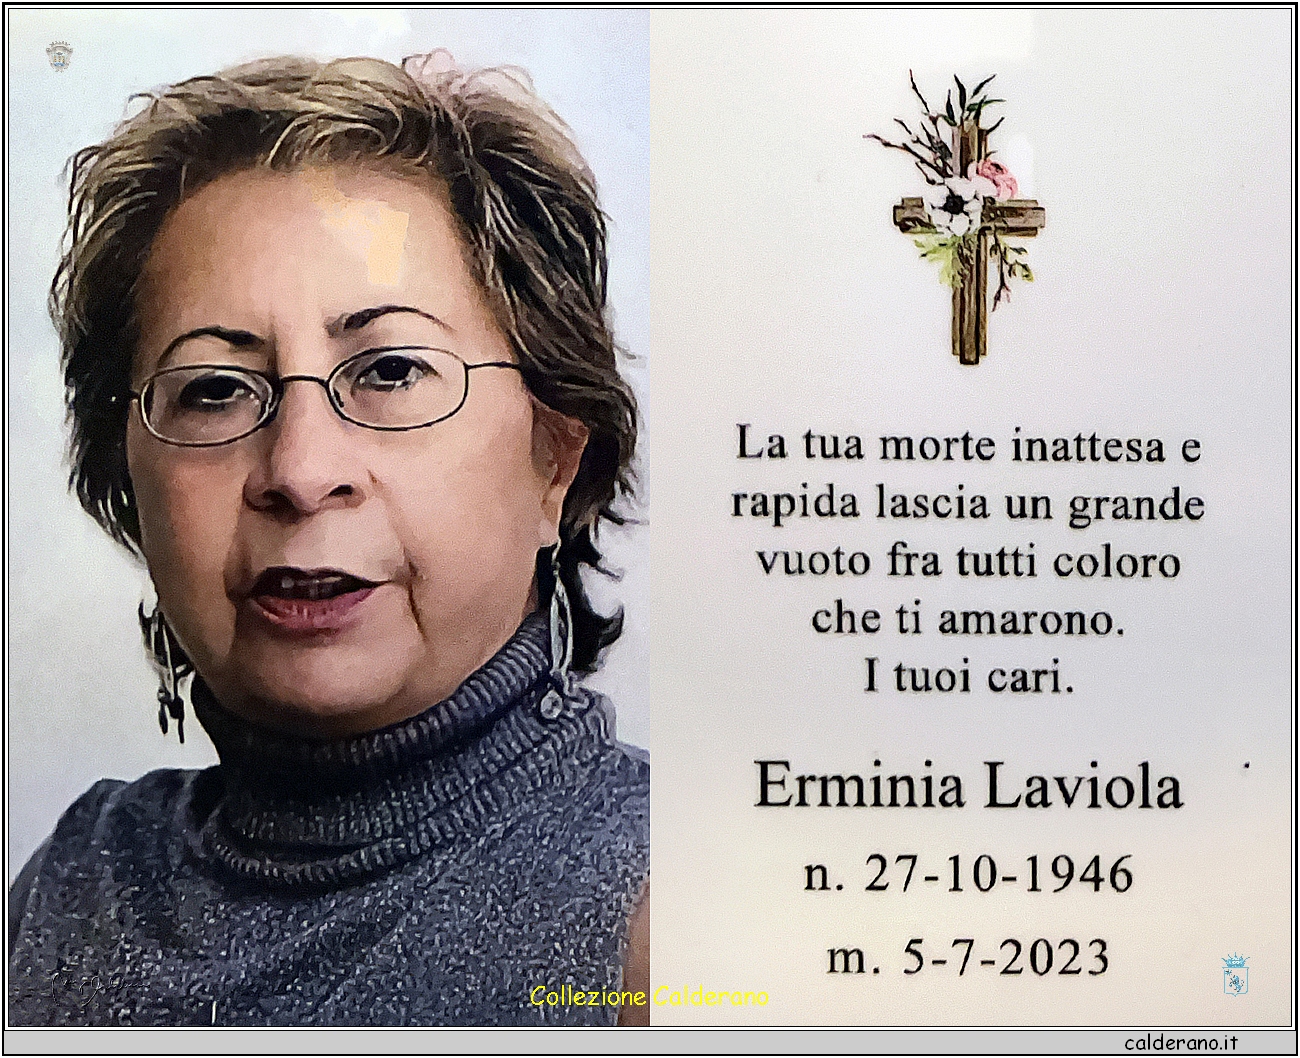 2023 Erminia Laviola in Bosone 77.jpg